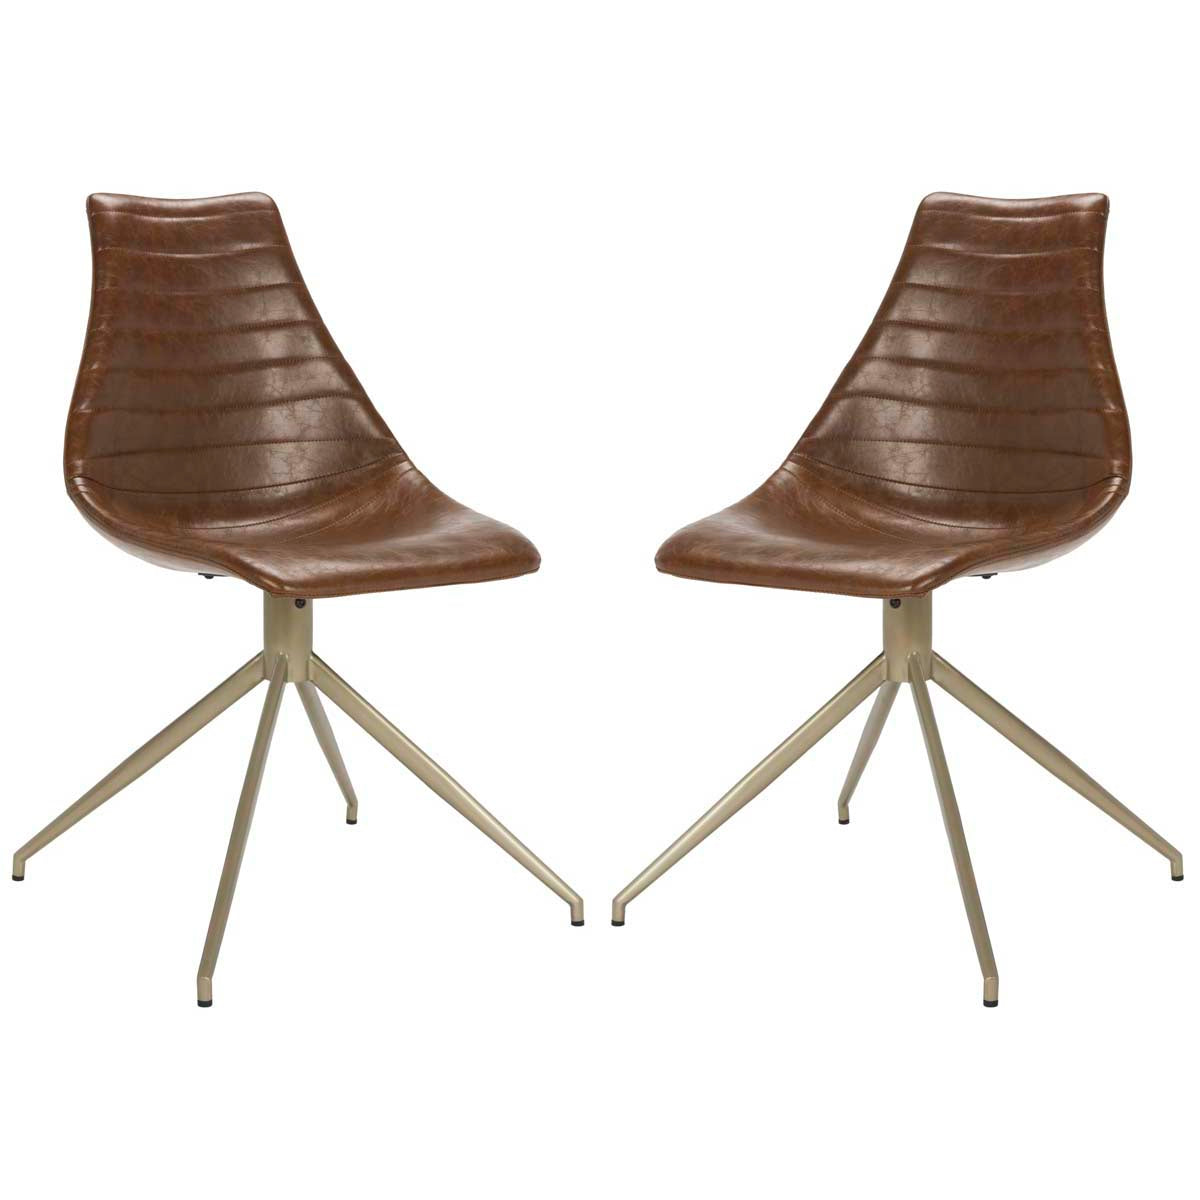 Safavieh Lynette Midcentury Modern Leather Swivel Dining Chair, ACH7006